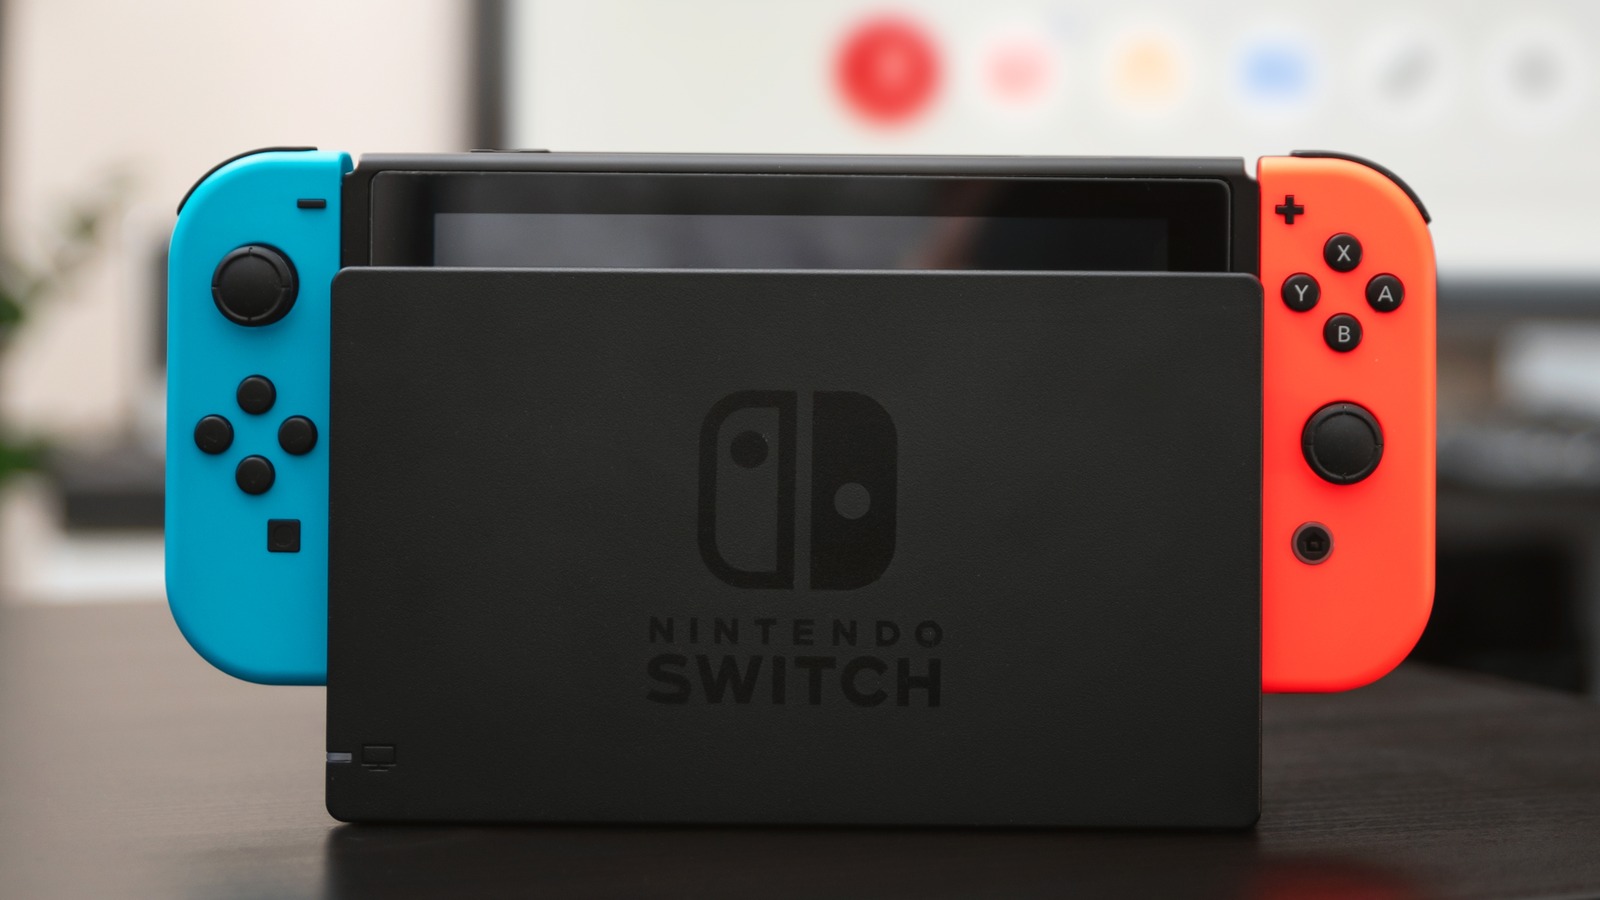 LIVE A LIVE - Nintendo Switch, Nintendo Switch